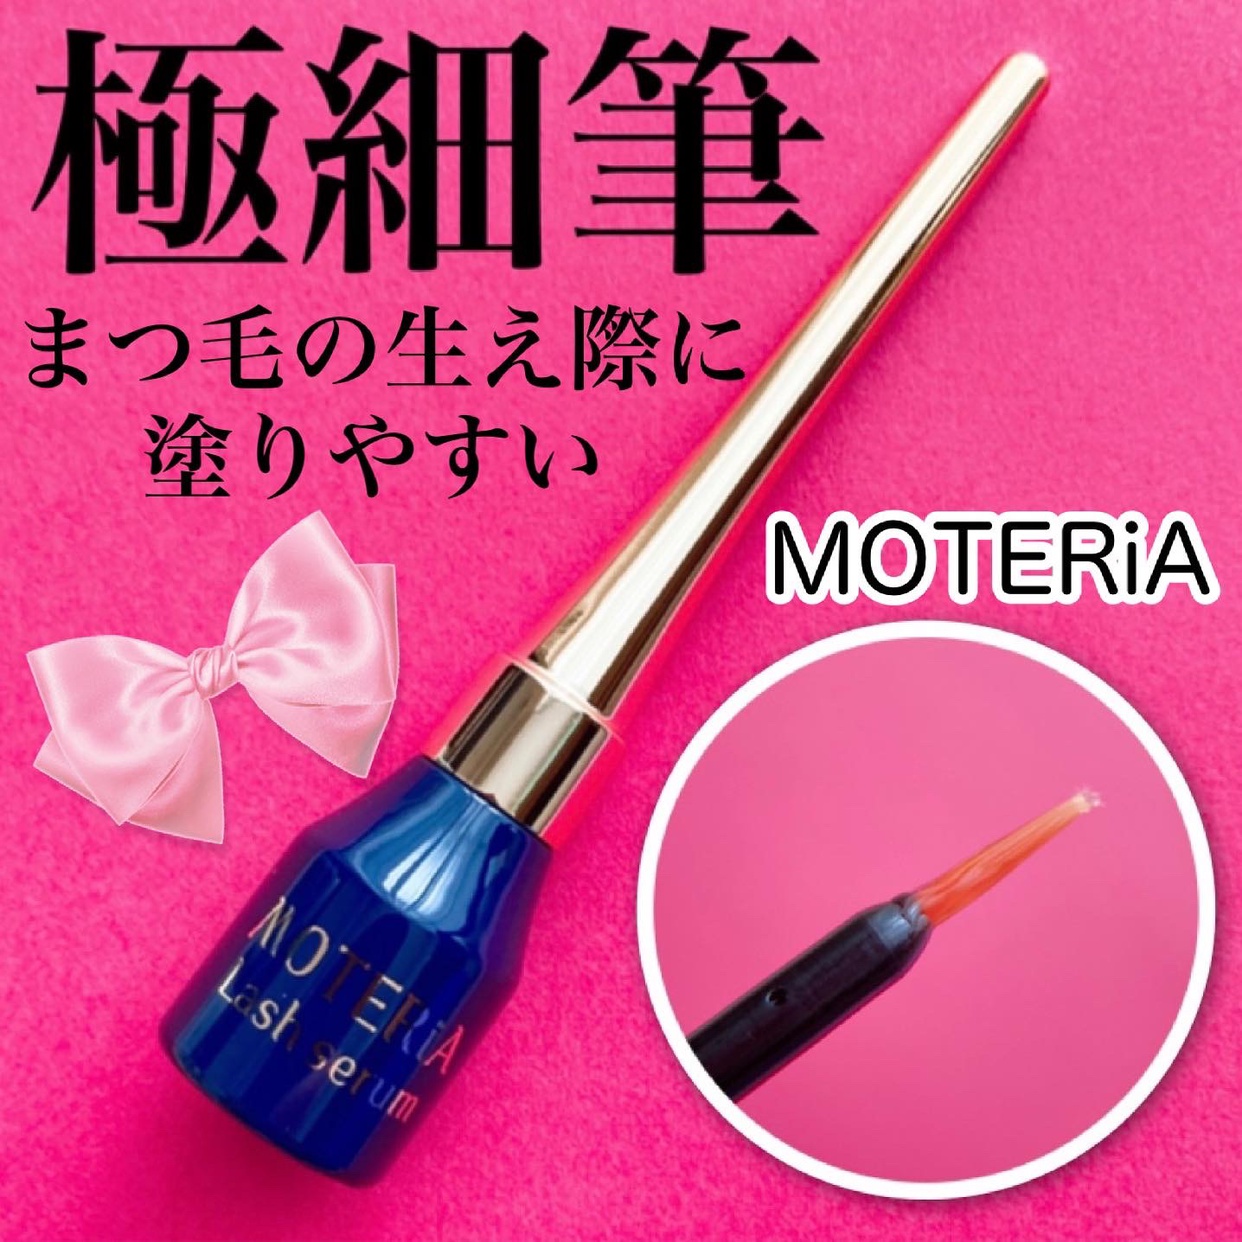 MOTERiA(モテリア) まつげ美容液に関するyunaさんの口コミ画像1